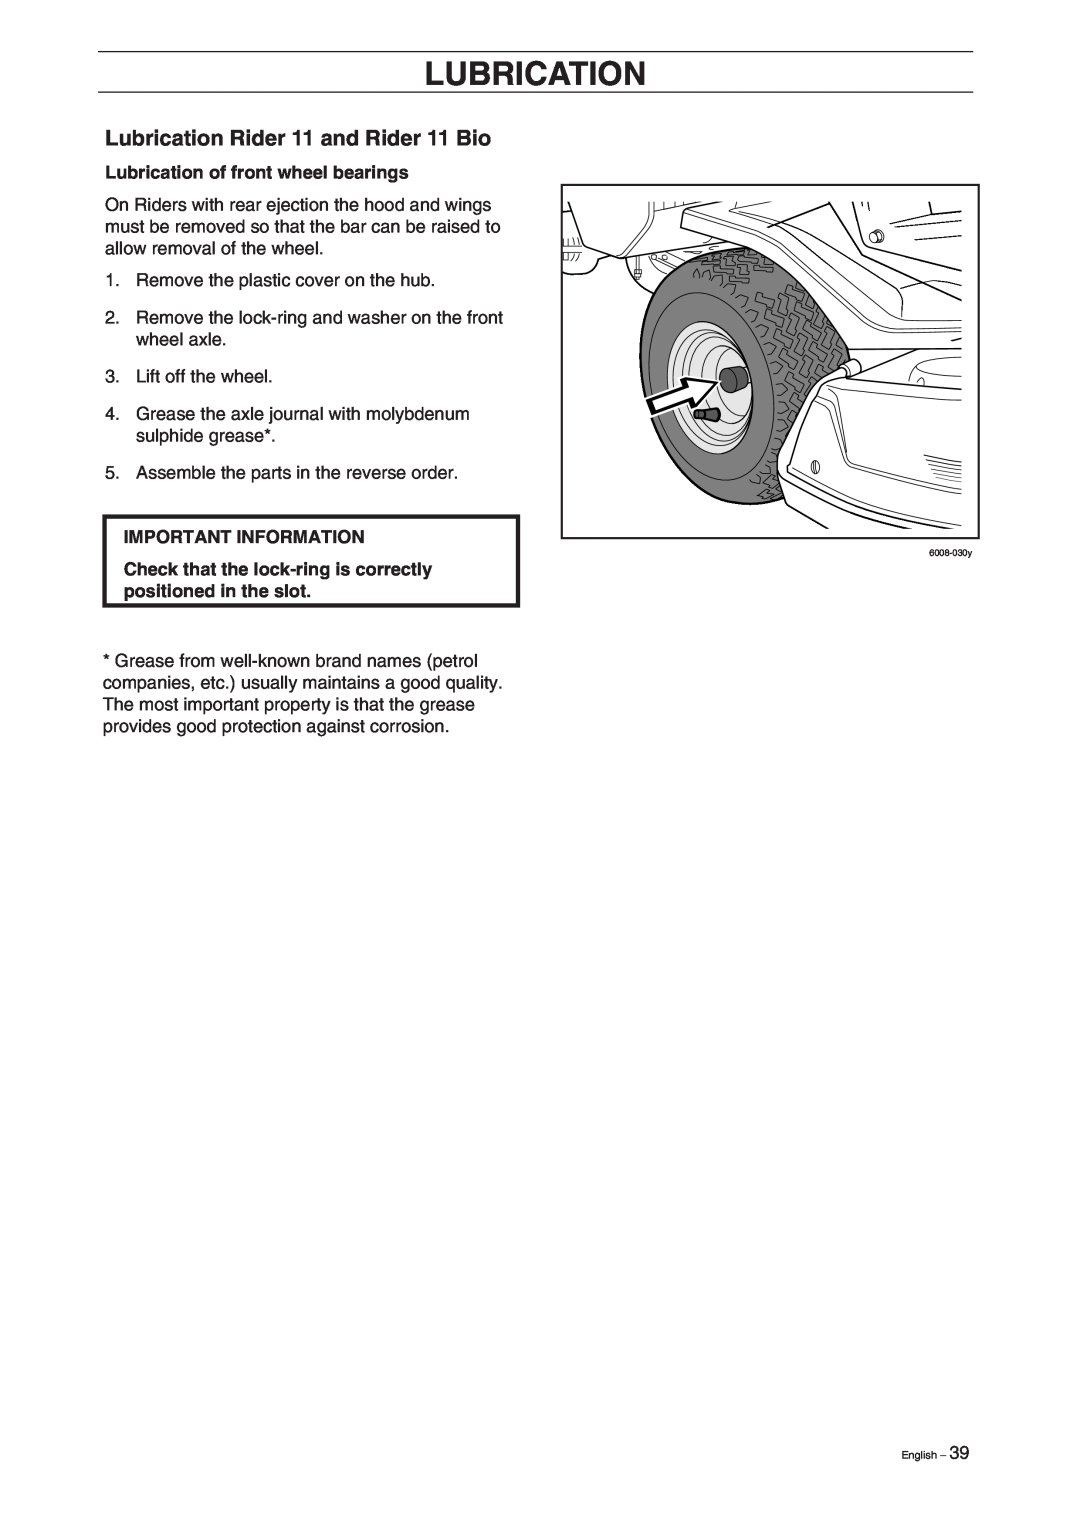 Husqvarna 13 manual Lubrication Rider 11 and Rider 11 Bio, Lubrication of front wheel bearings, Important Information 